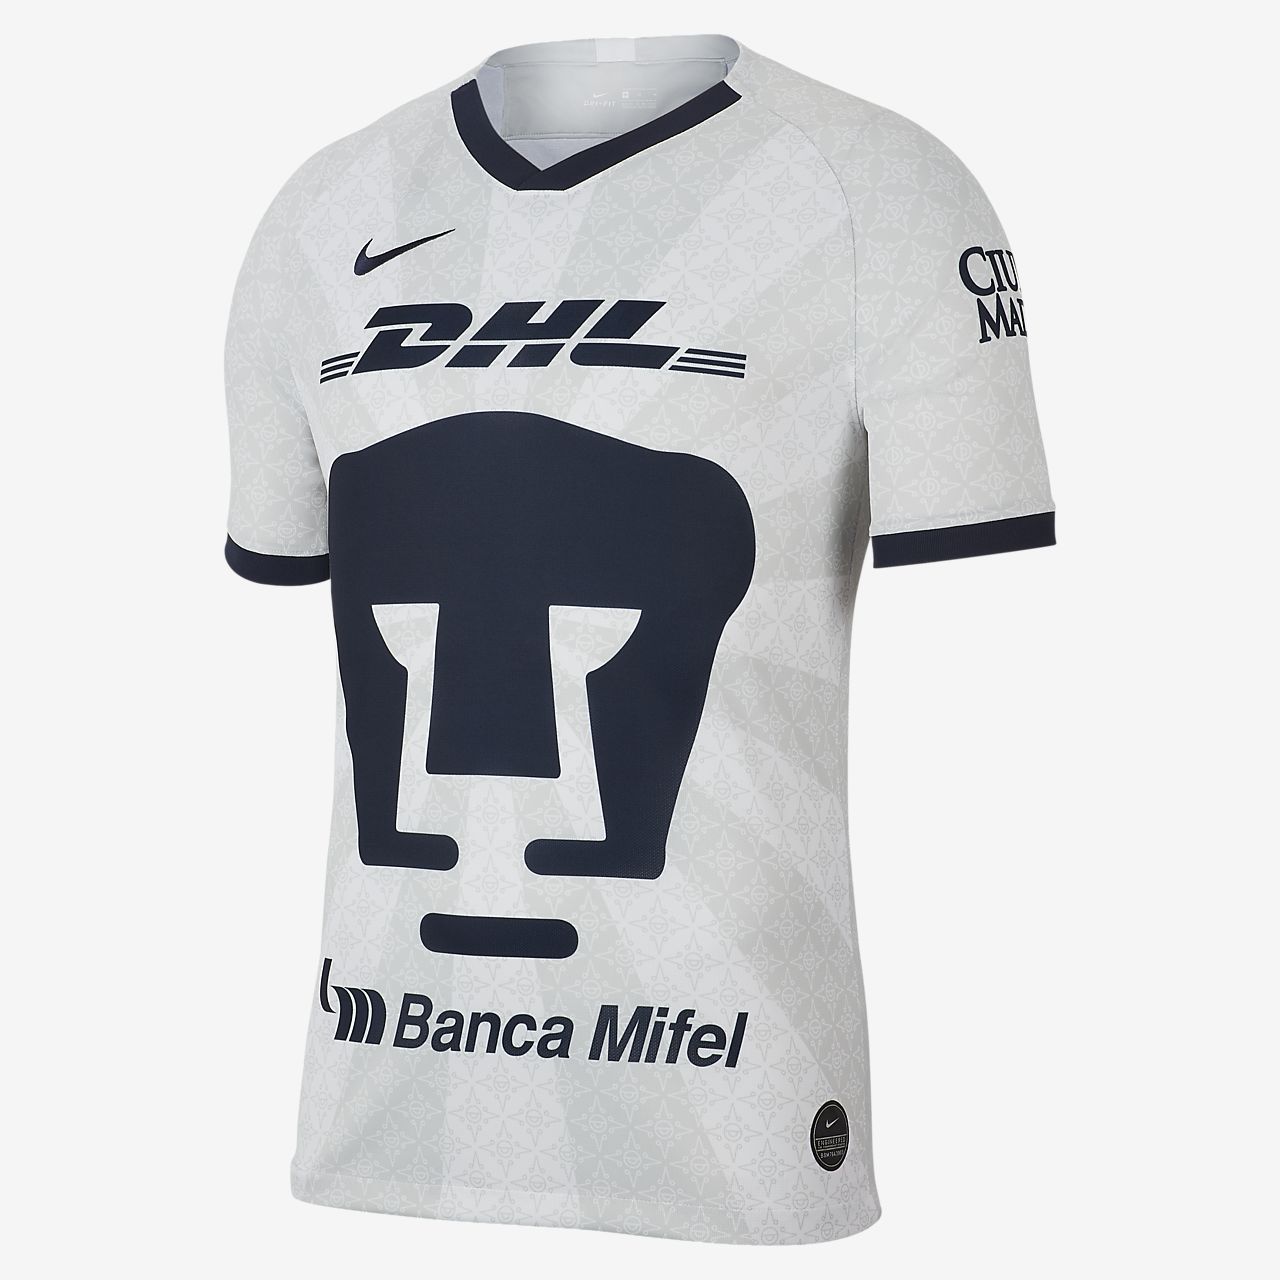 Pumas UNAM 2019/20 Stadium Home Men's Football Shirt. Nike CZ